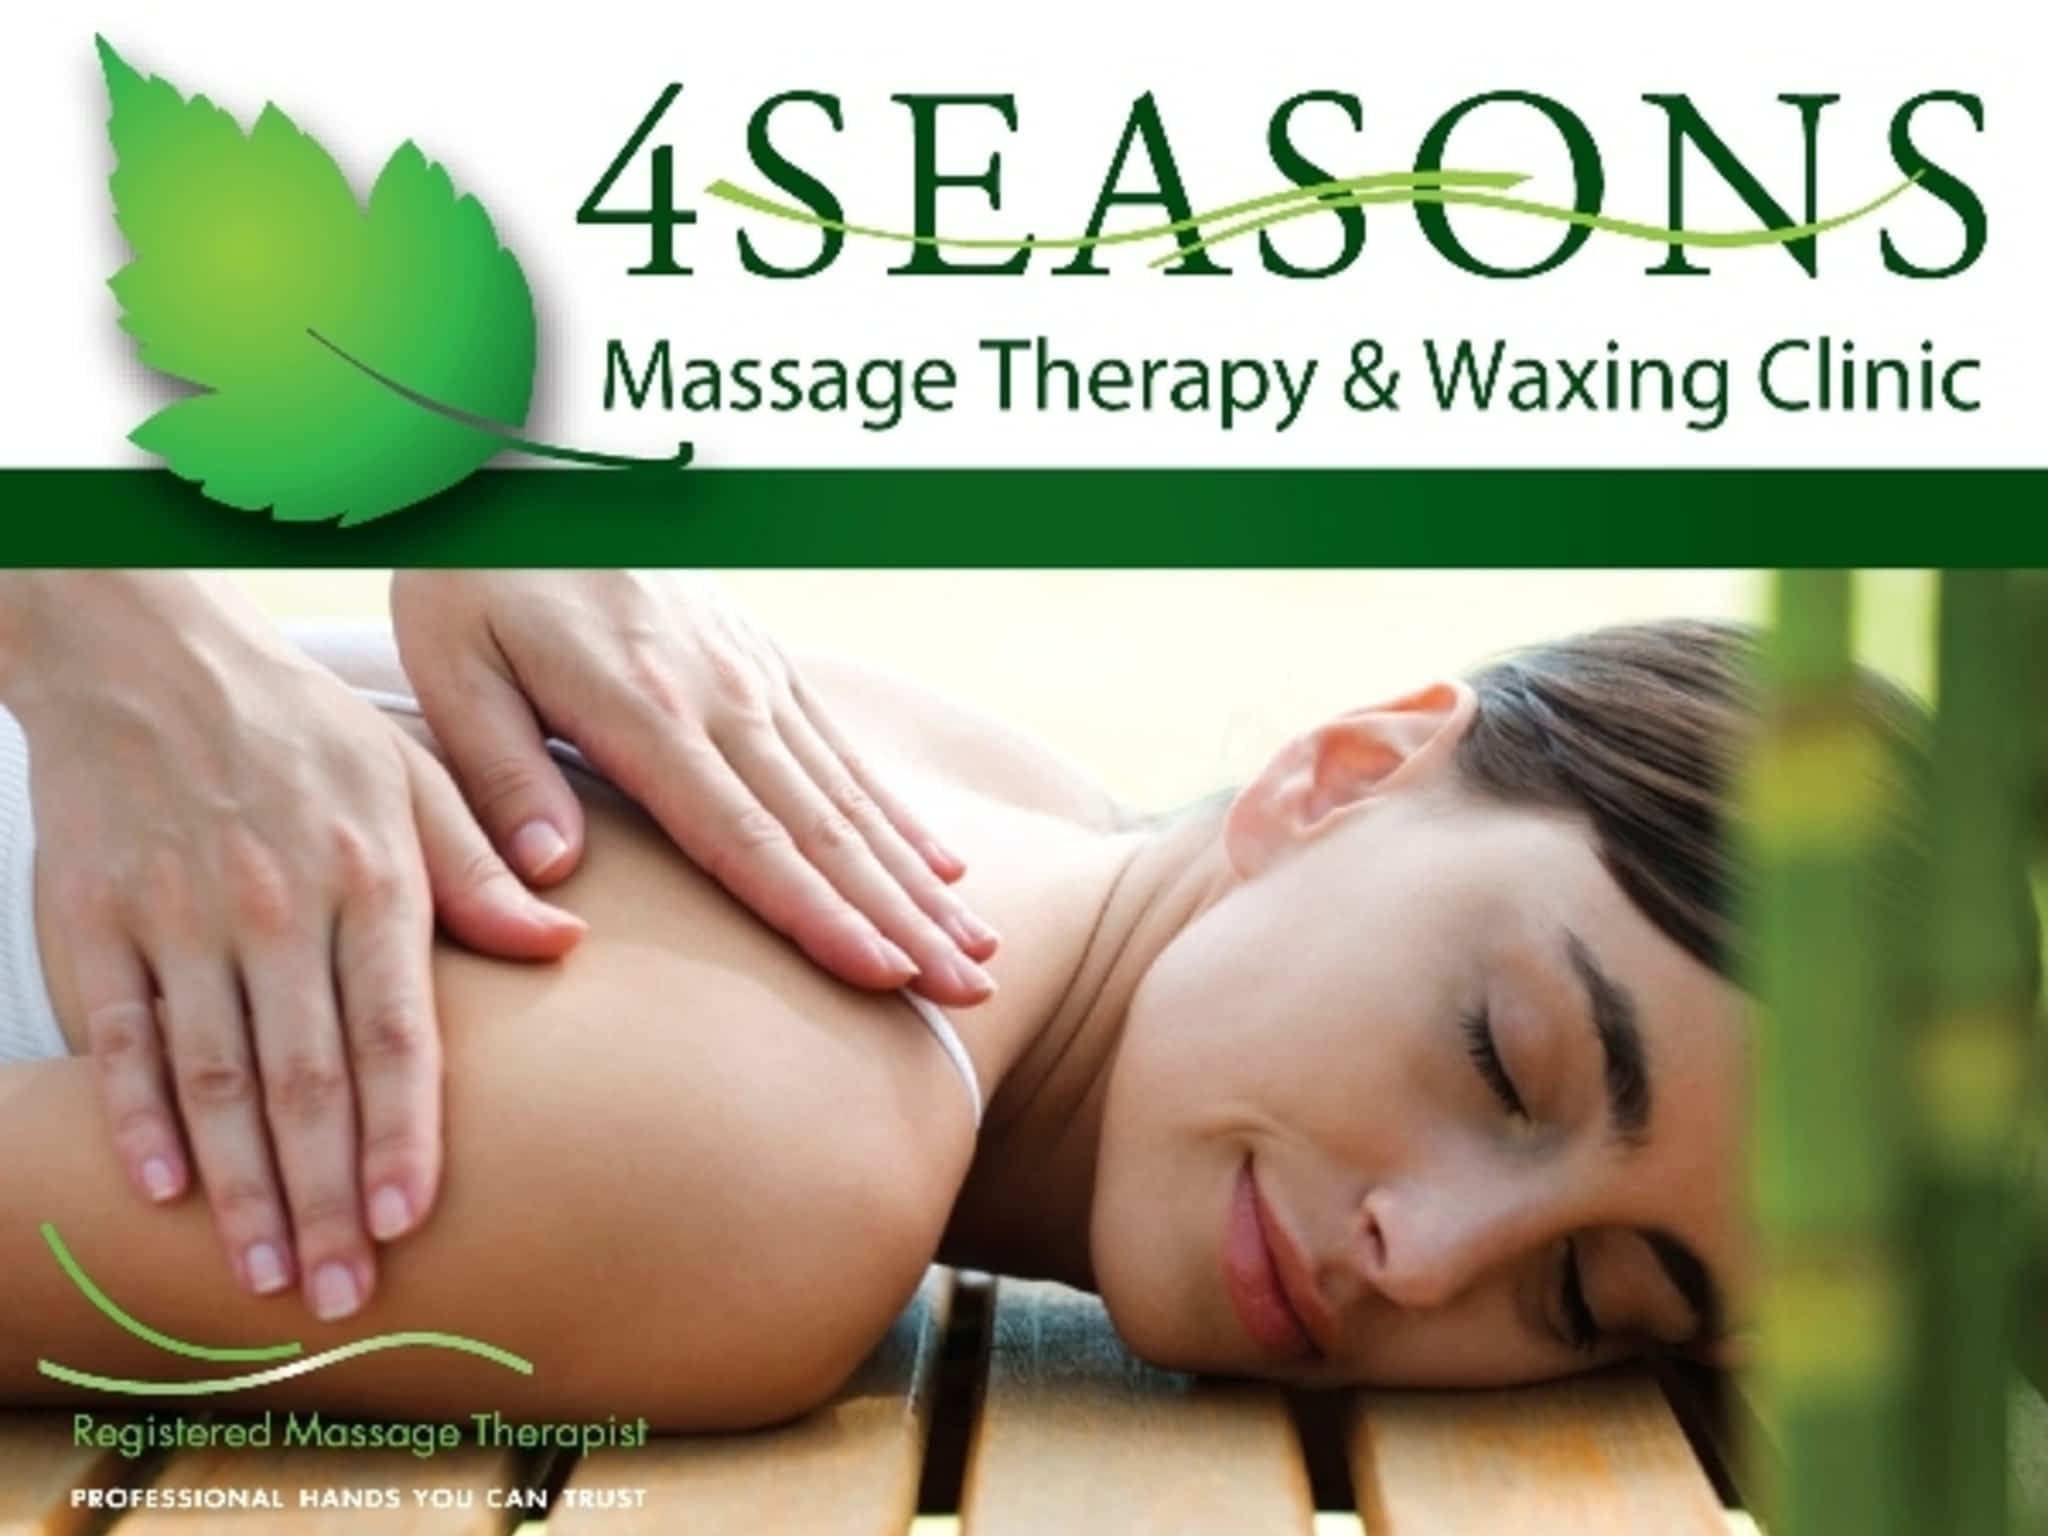 photo 4Seasons Massage Therapy & Waxing Clinic